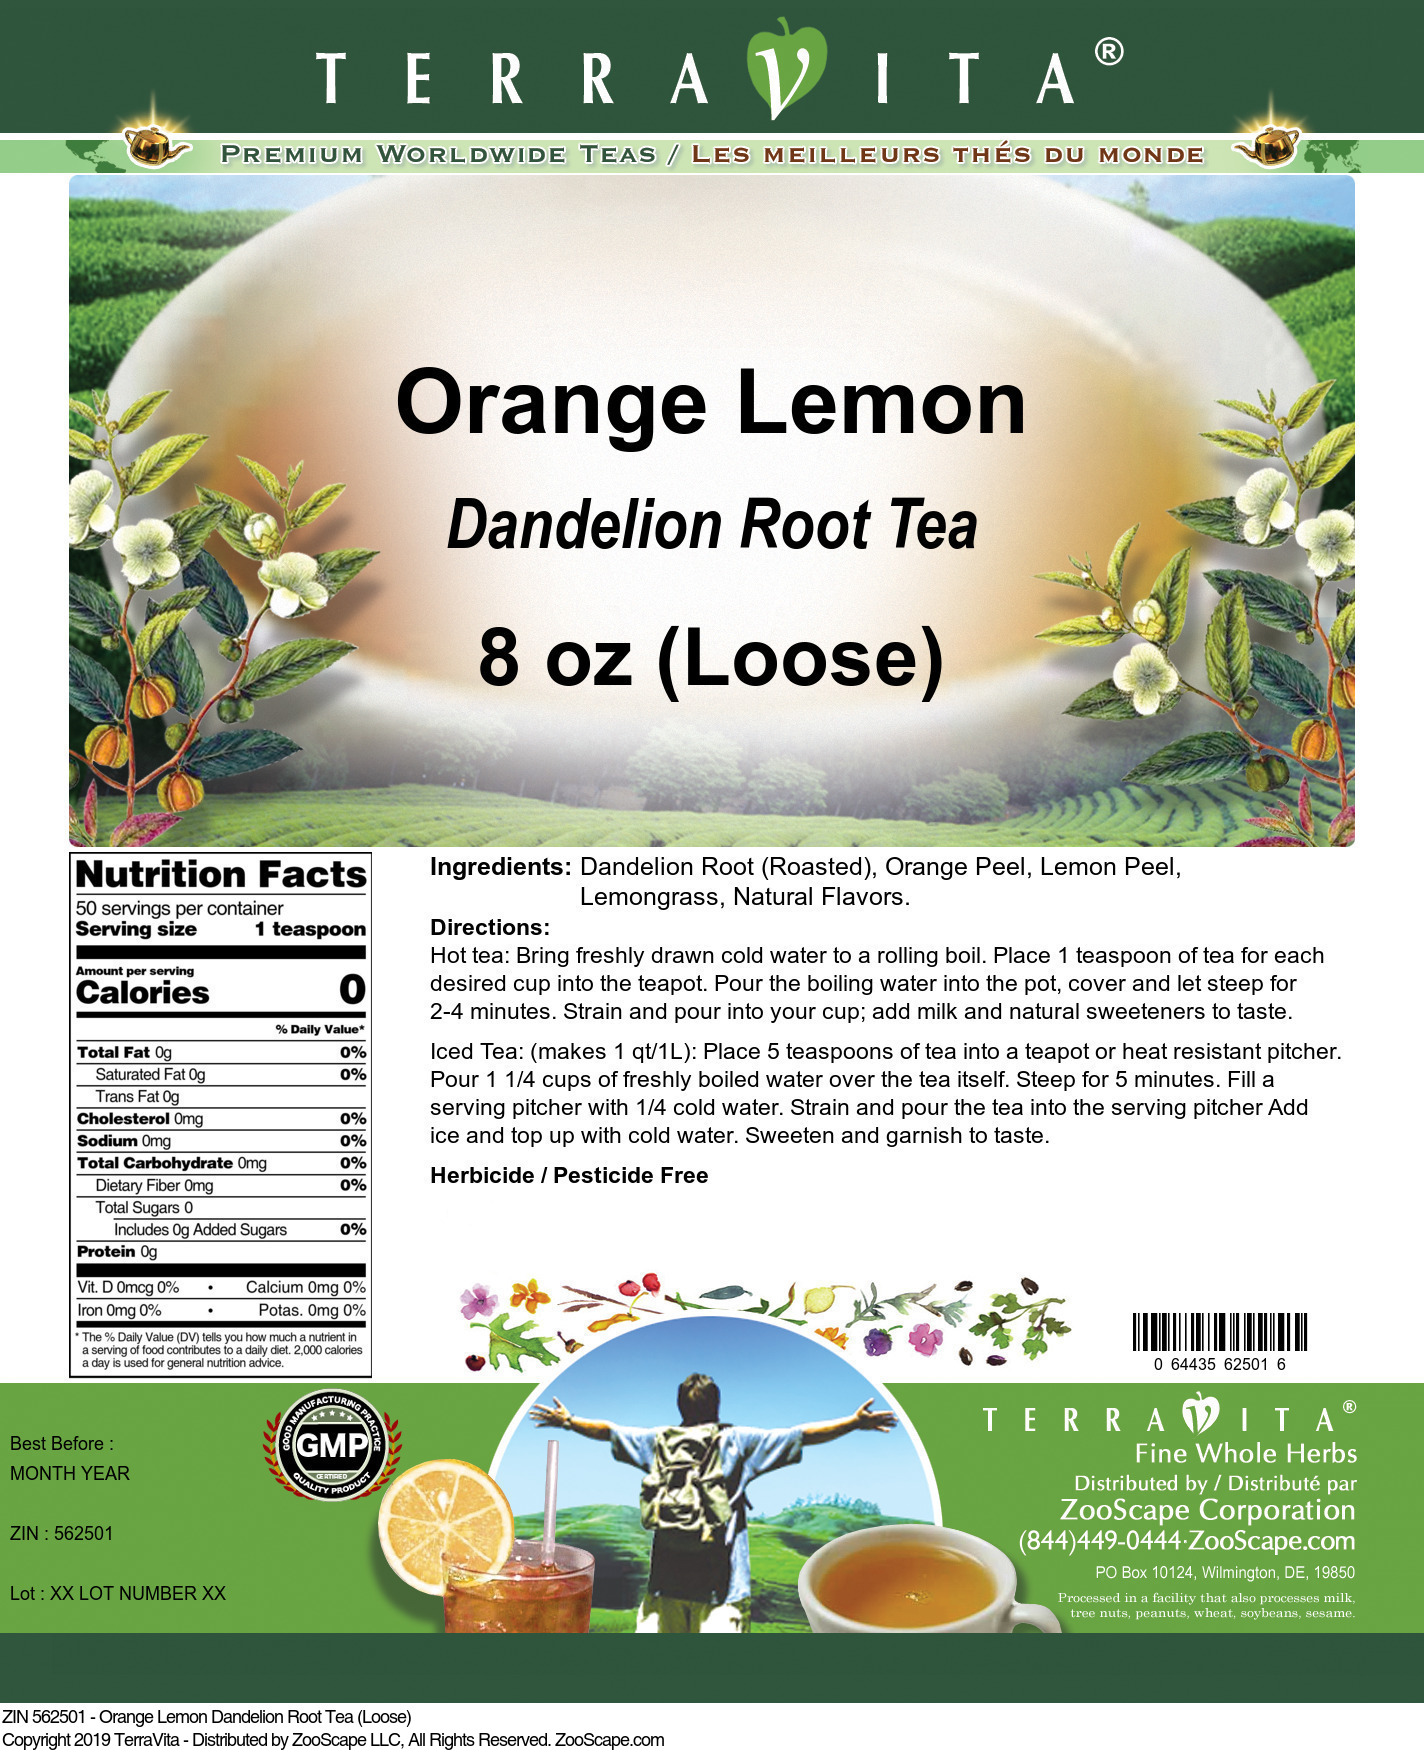 Orange Lemon Dandelion Root Tea (Loose) - Label